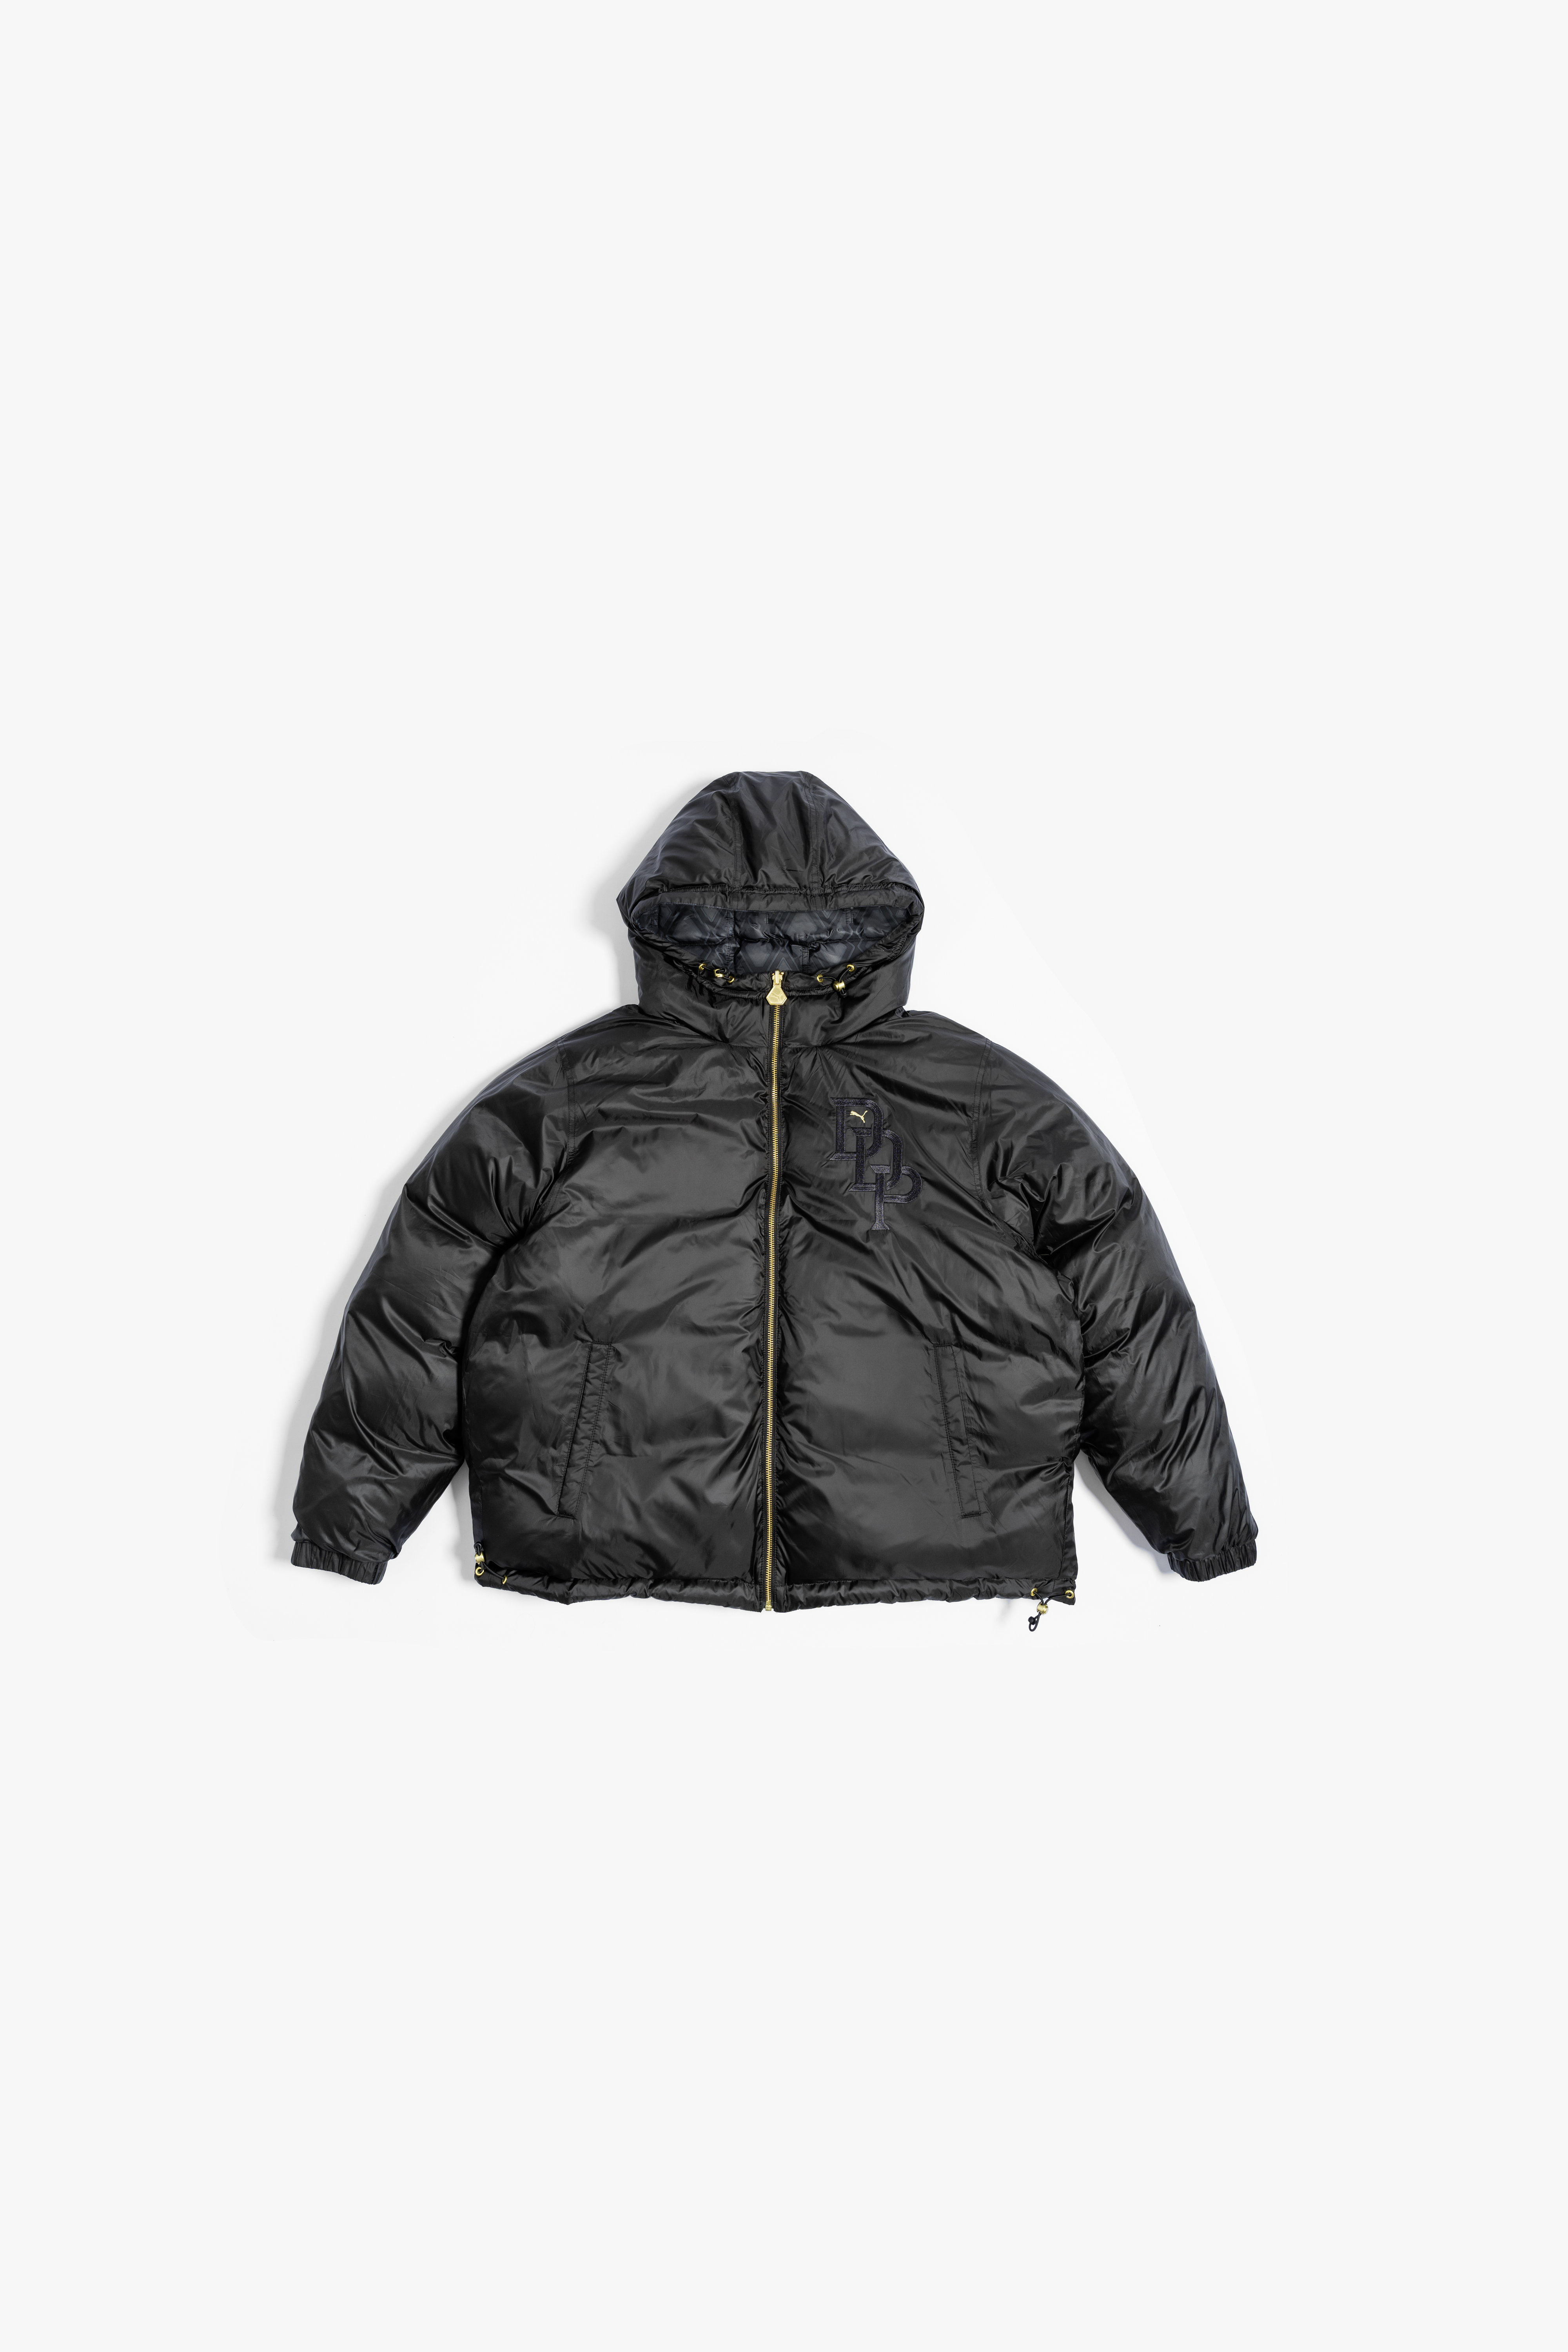 Dapper Dan Leather Jacket - Jackets Expert